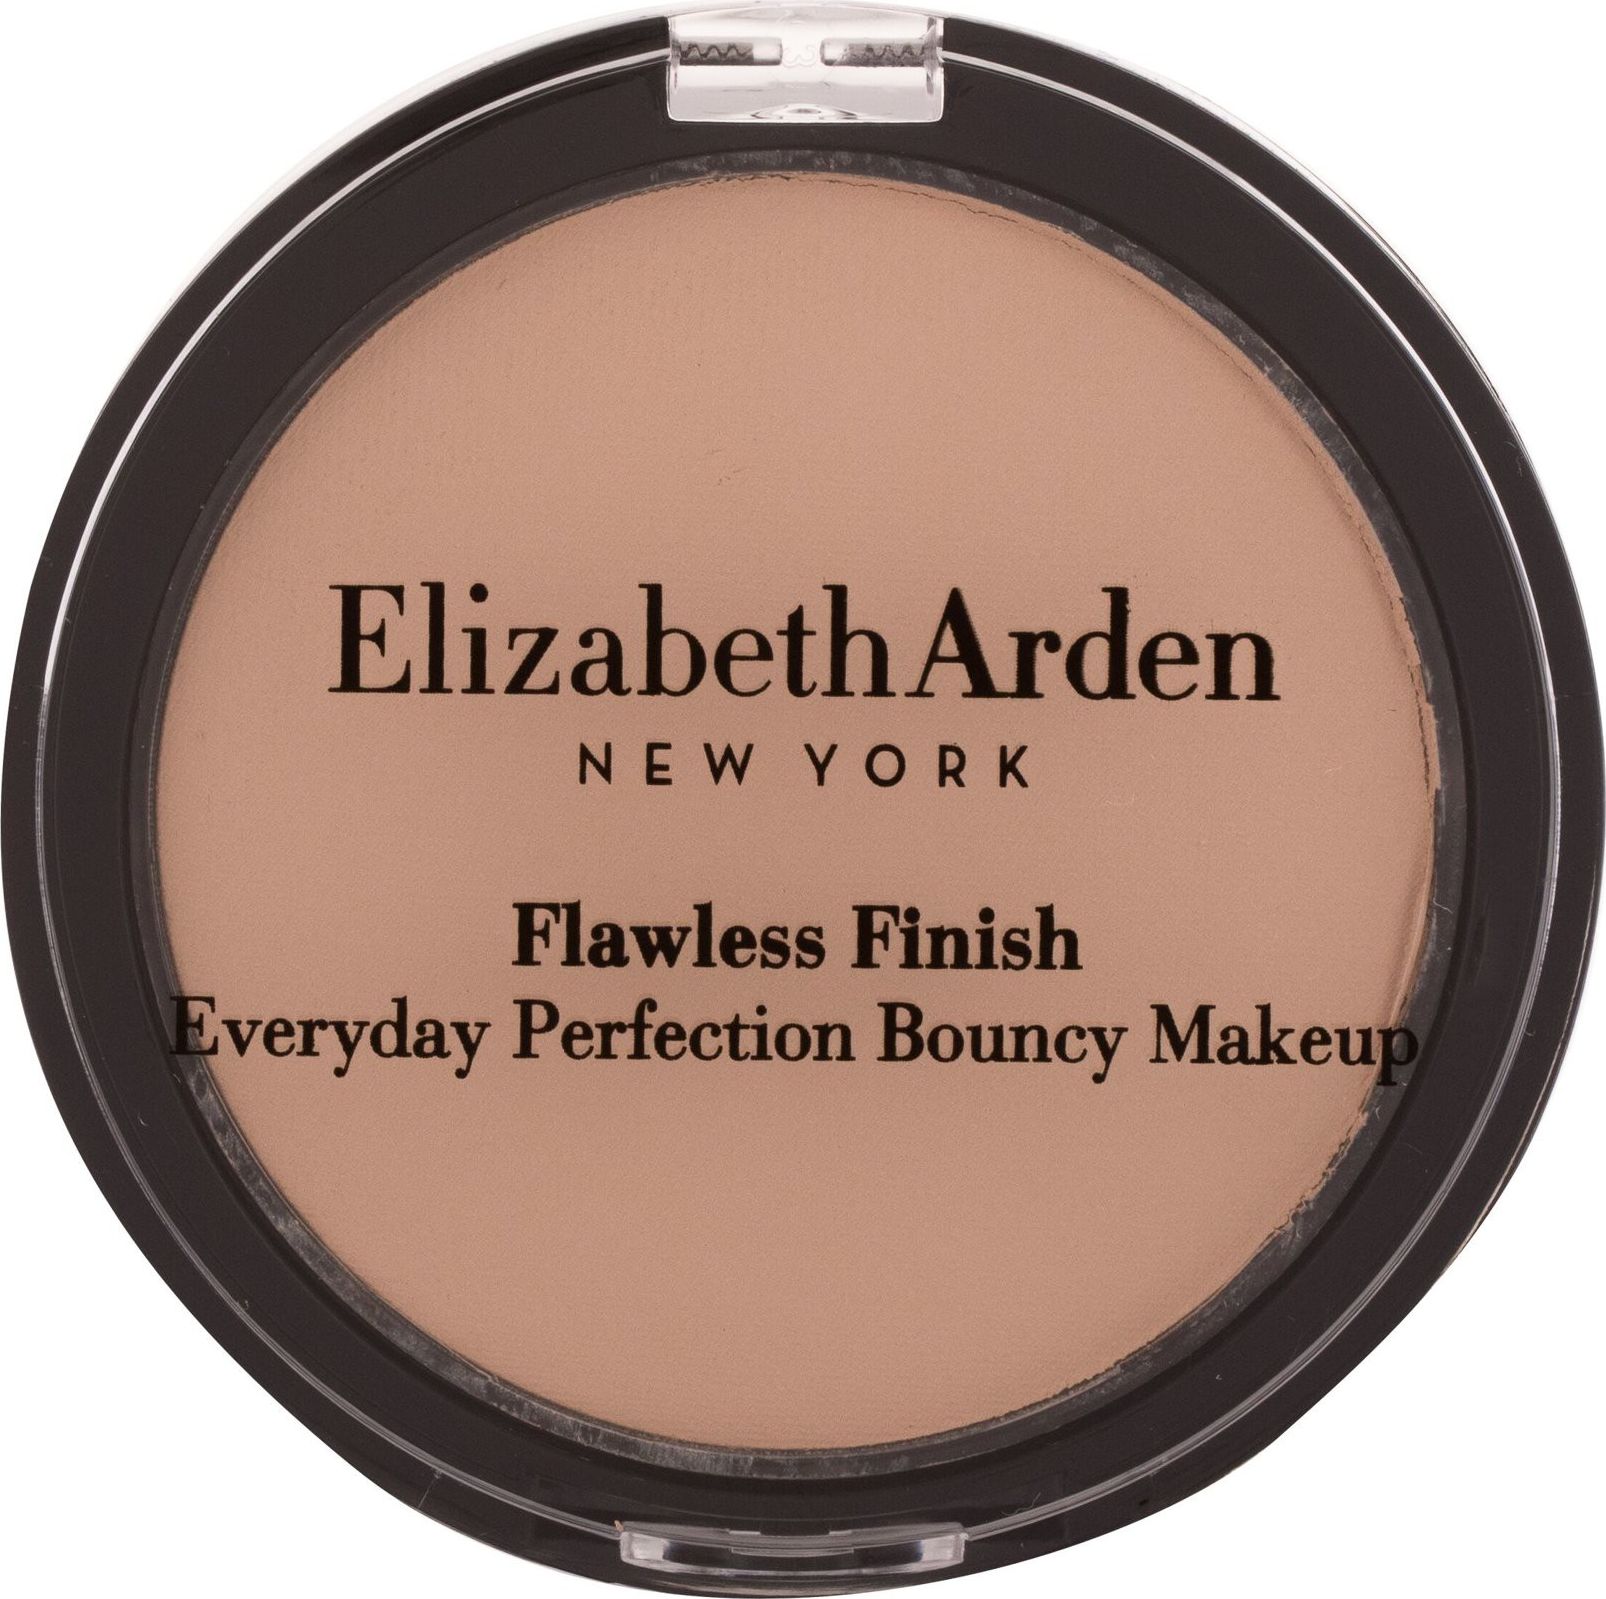 Elizabeth Arden Elizabeth Arden Flawless Finish Everyday Perfection Podklad 9g 02 Alabaster tester 119764 (085805562335) tonālais krēms